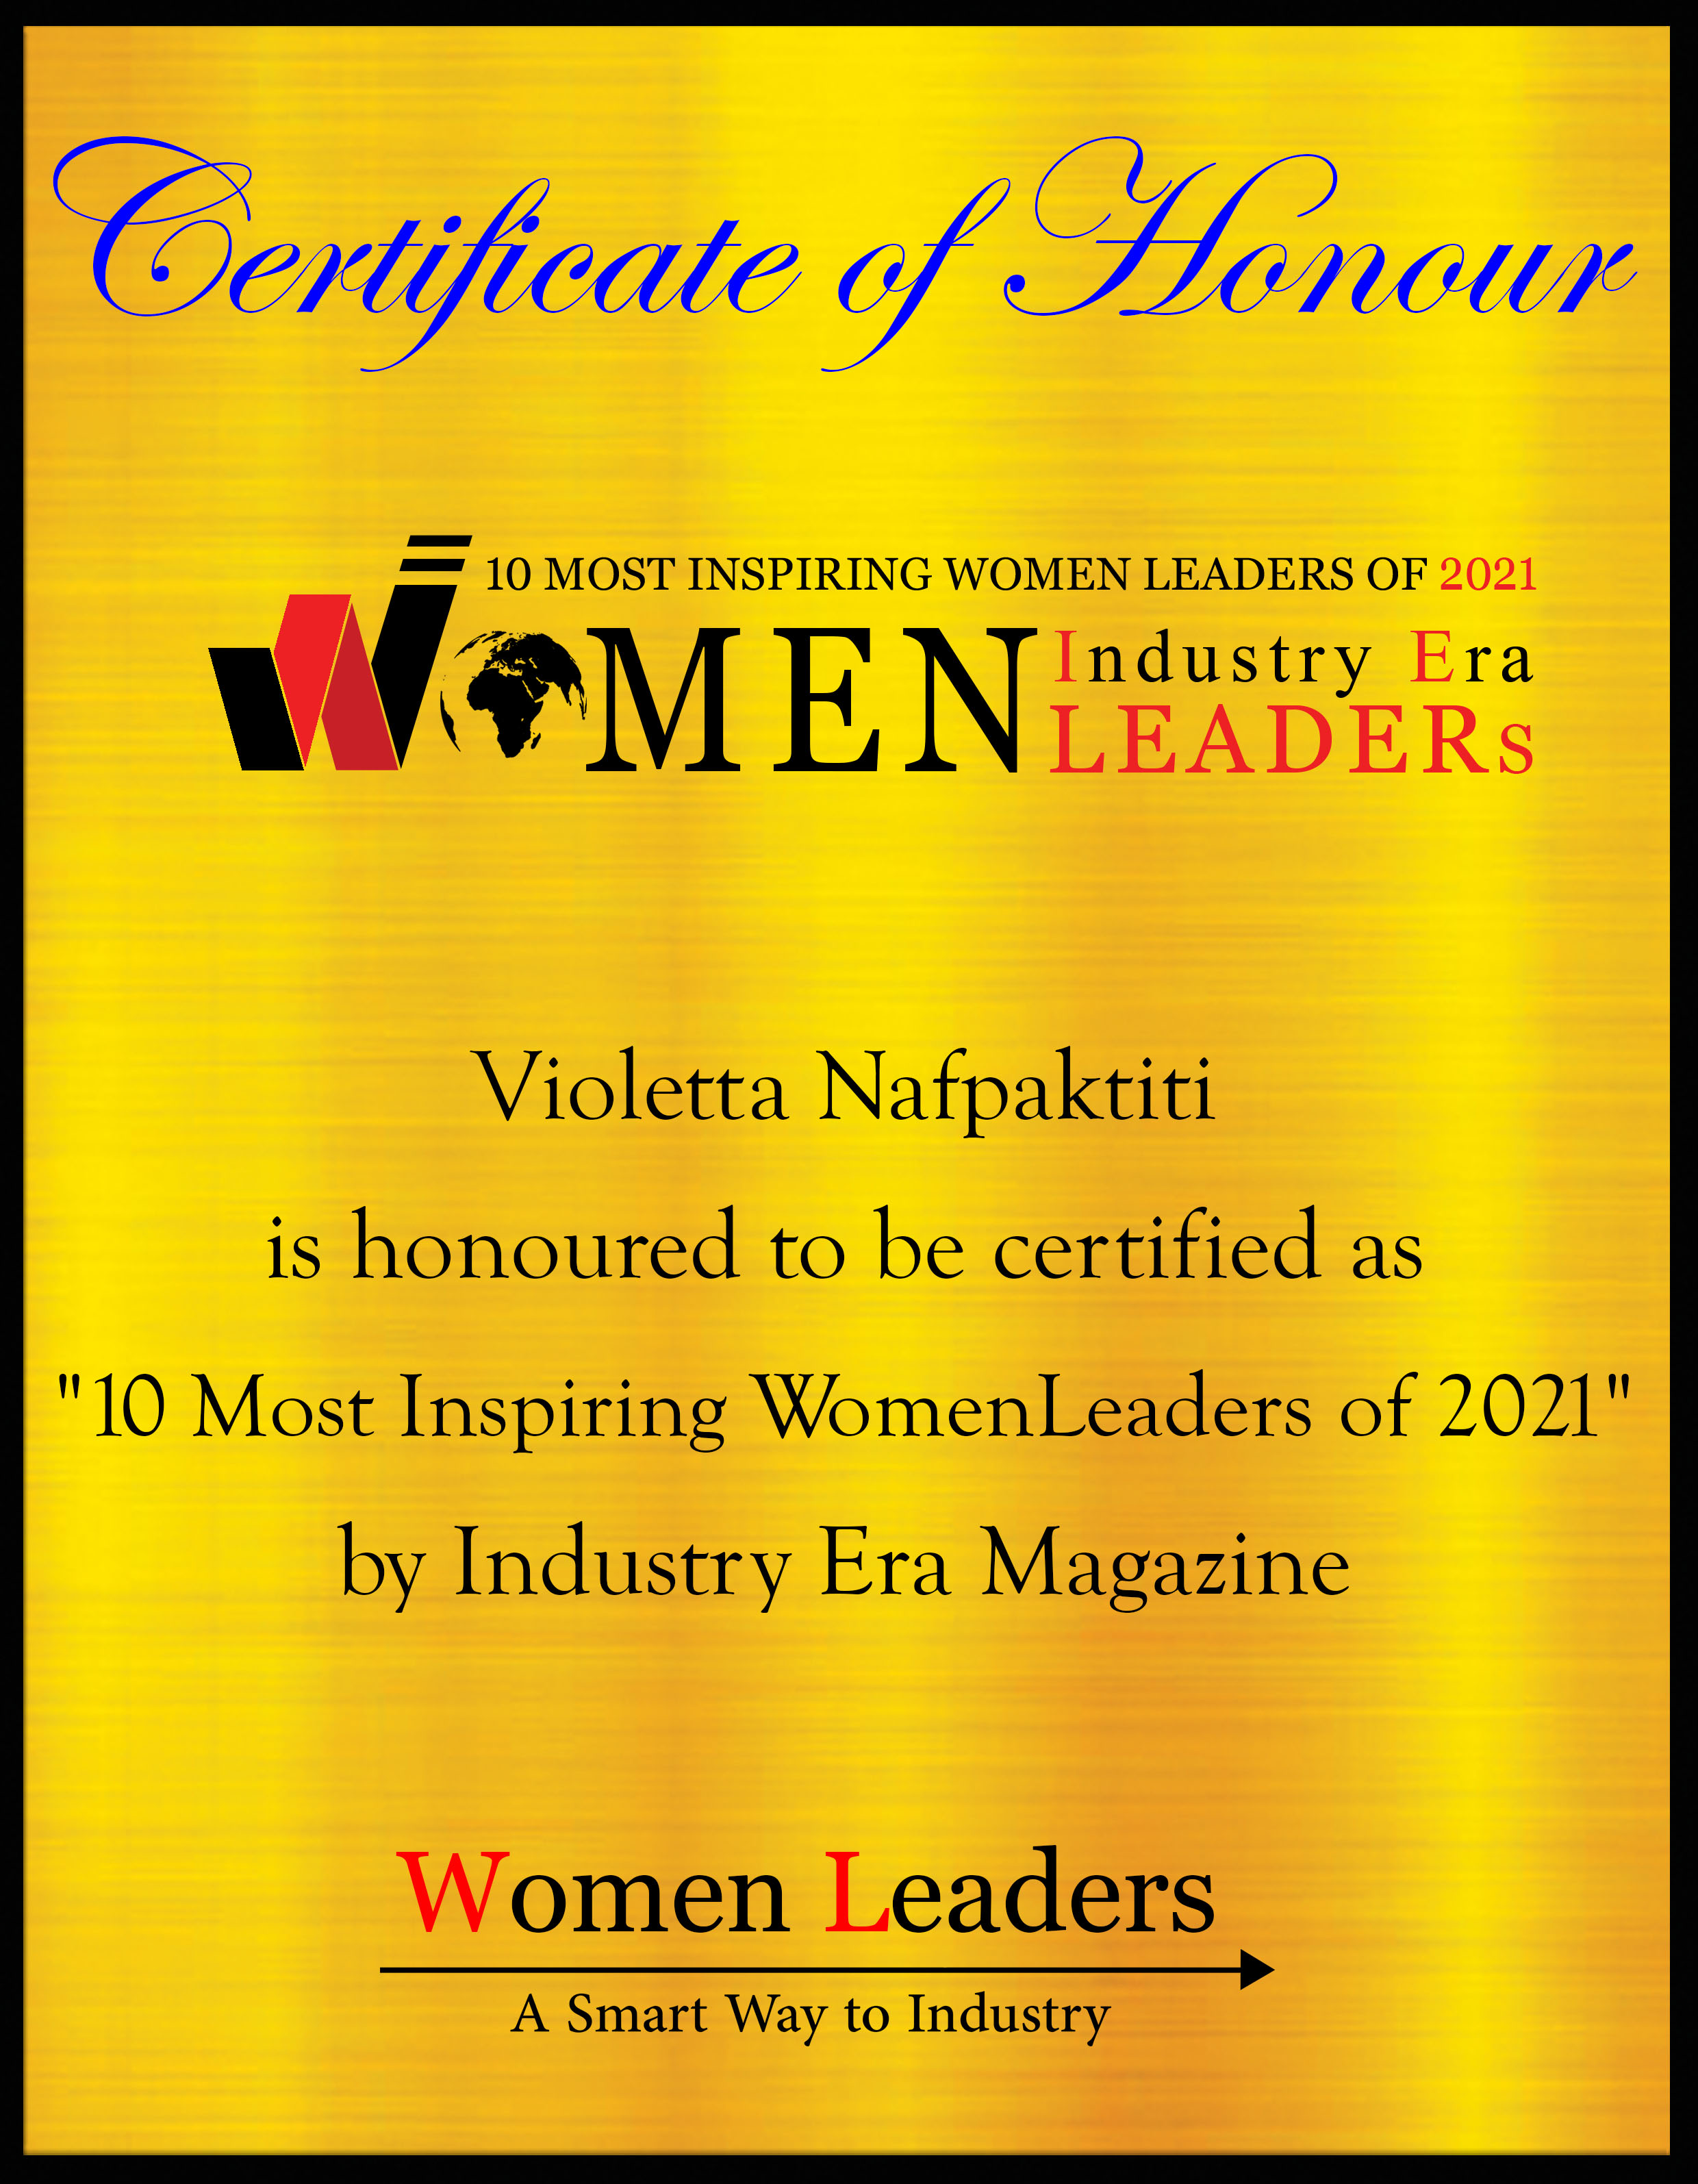 Violetta Nafpaktiti, Managing Director of DotCoop, Most Inspiring WomenLeaders of 2021